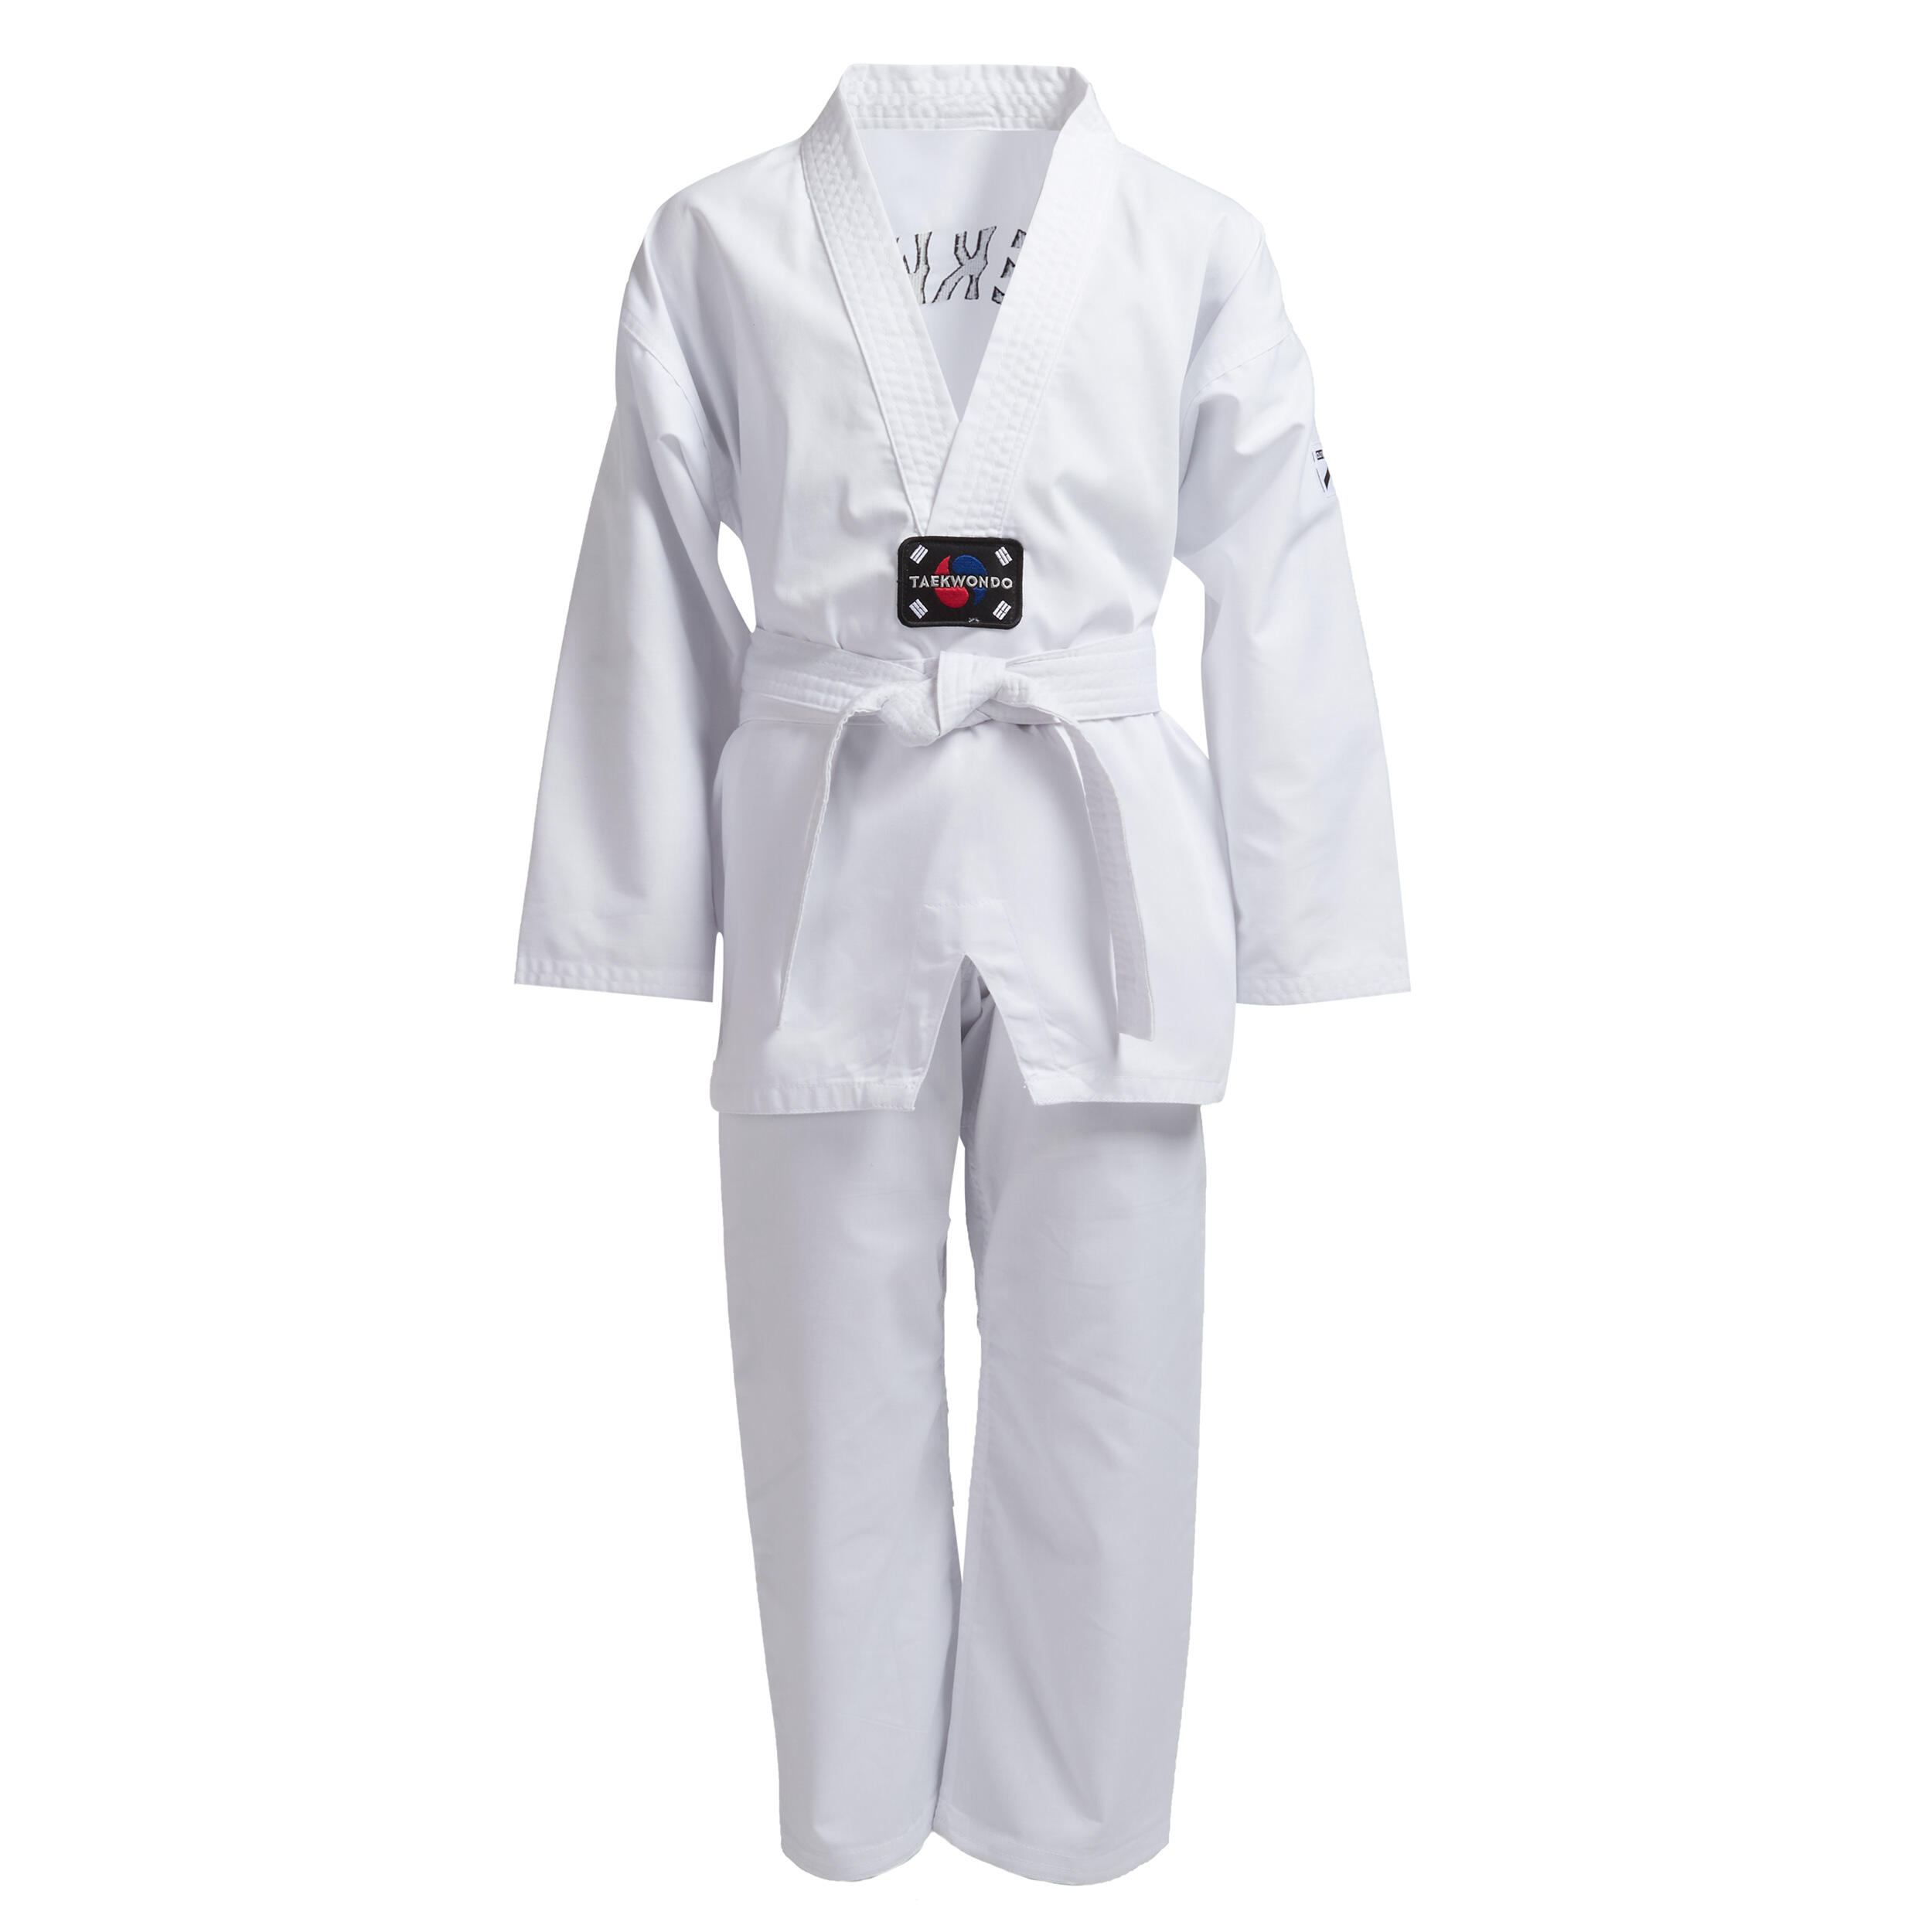 mit Weißgurt Gr Taekwondo-Anzug Mod Dobok Taekwondoanzug 170 16 